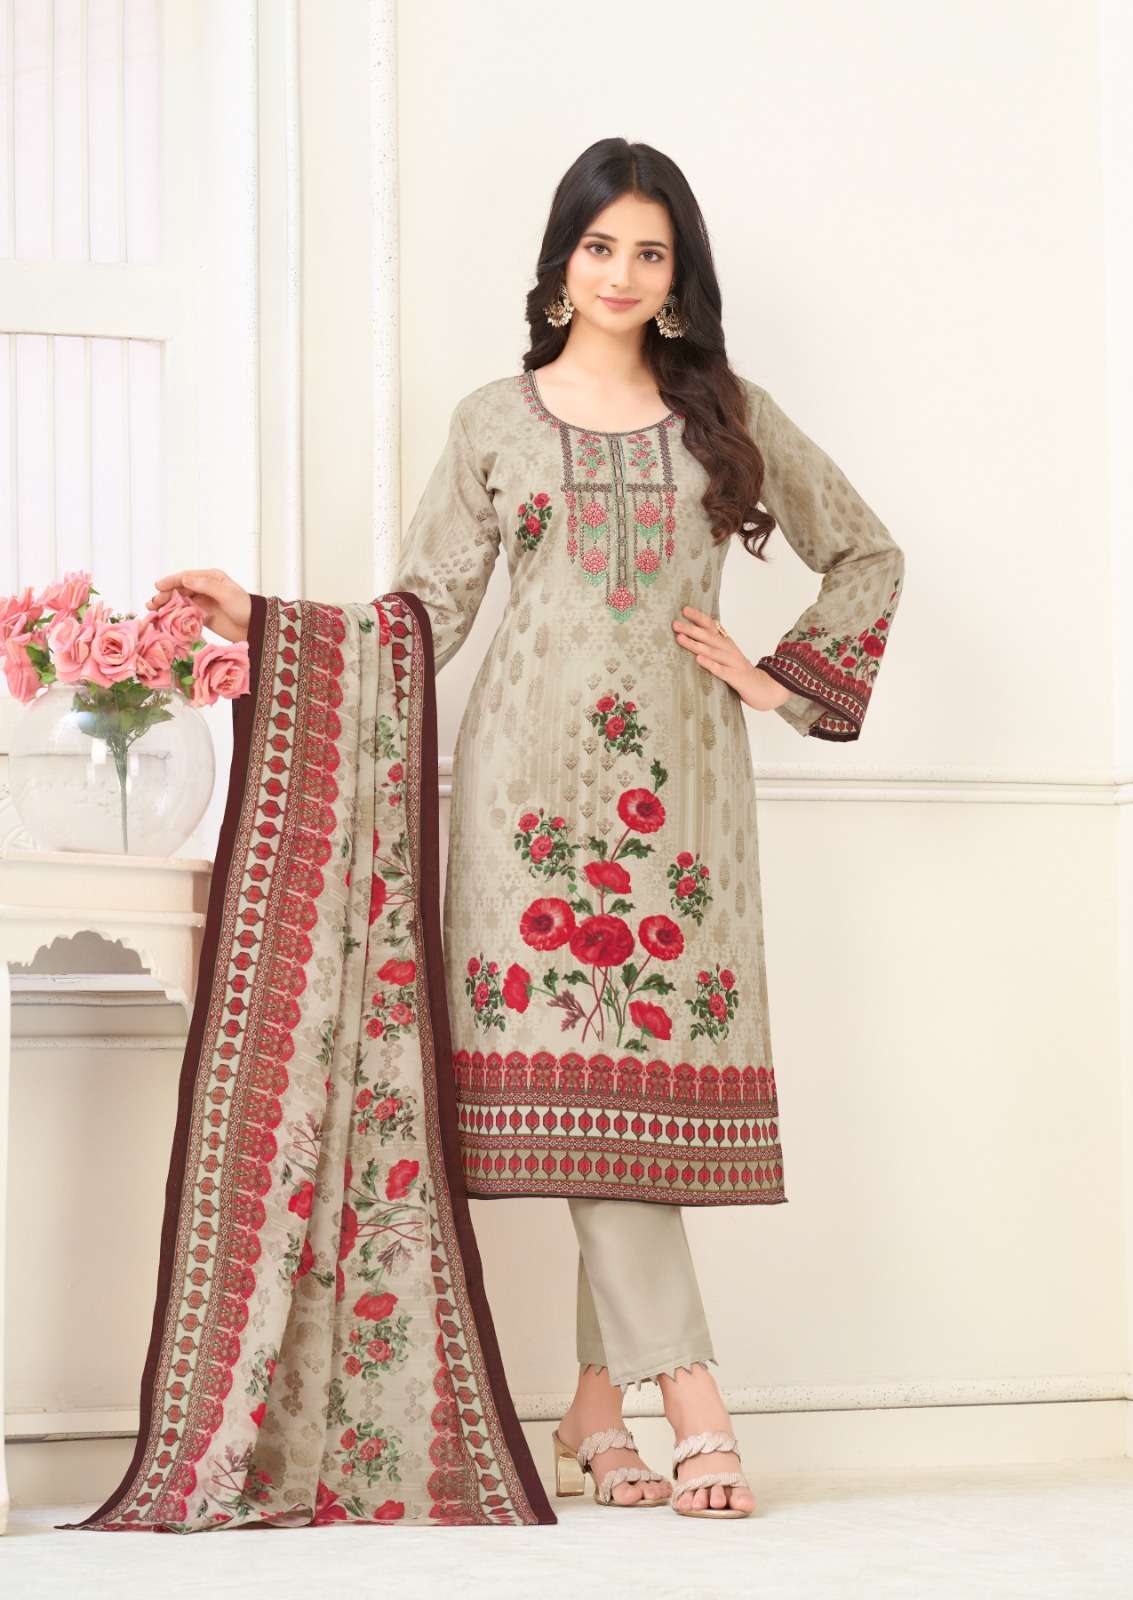 al karam nairah 1001-1008 series soft cotton exclusive designer dress material wholesale collection surat